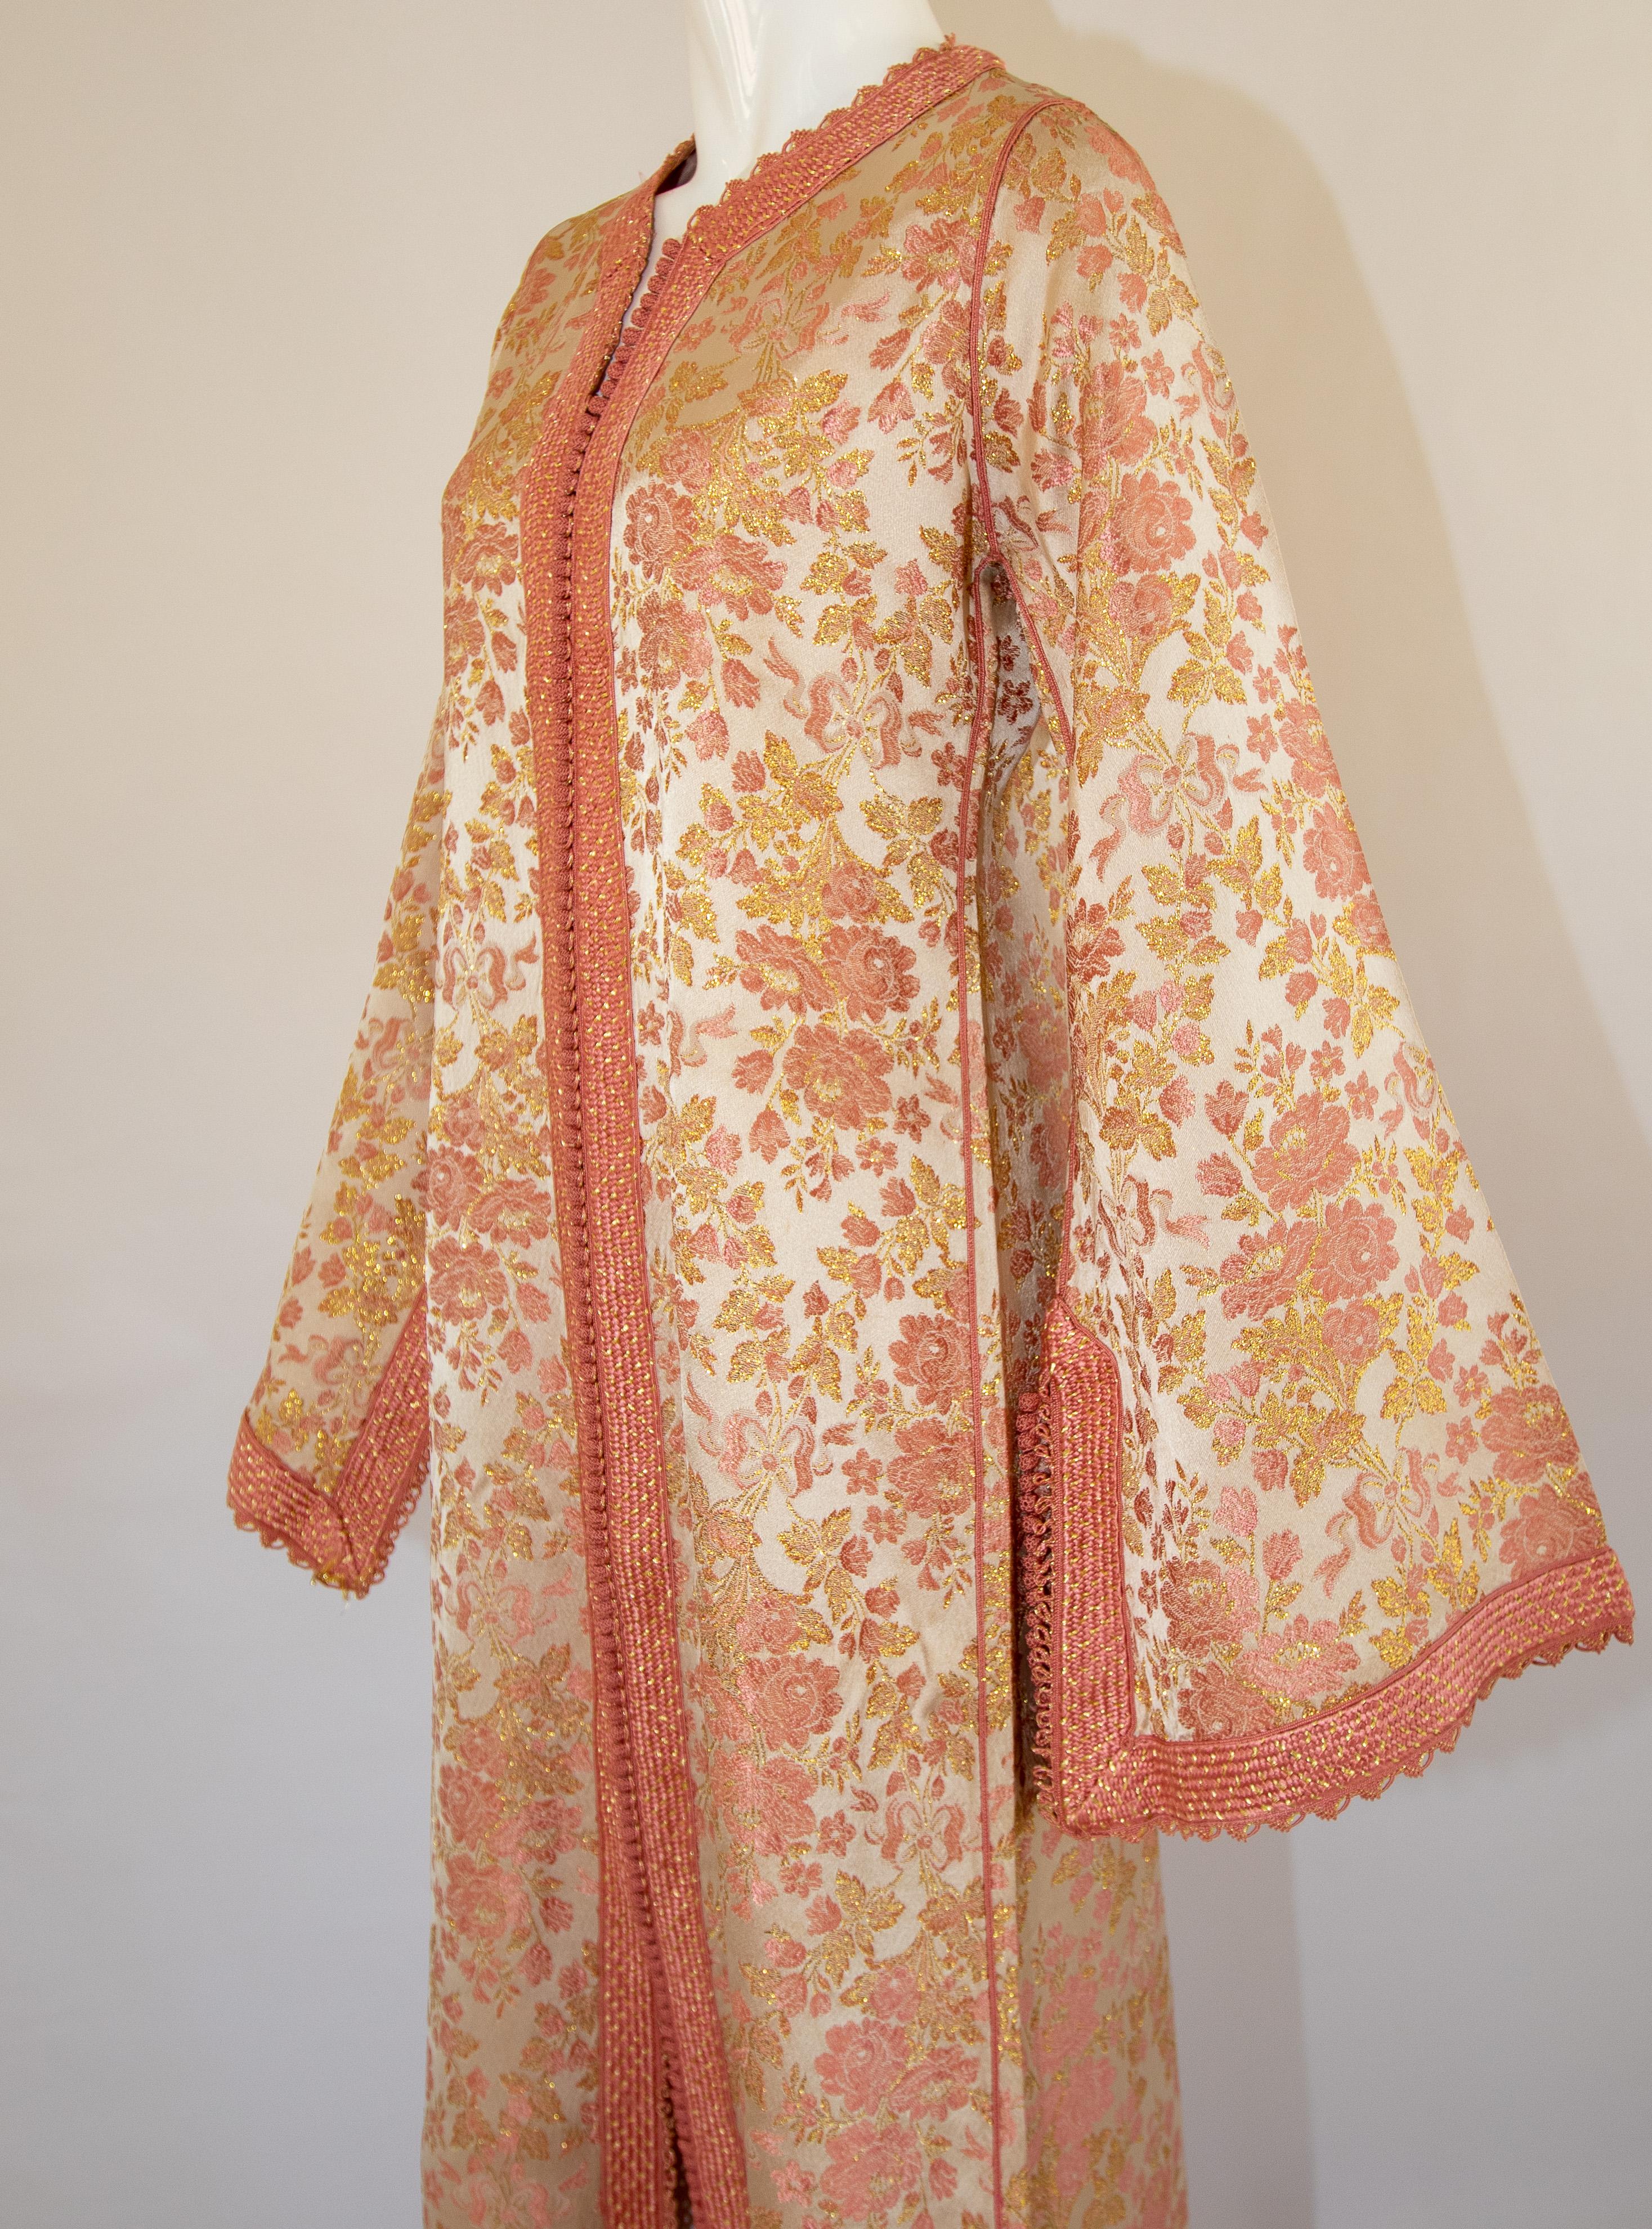 Women's or Men's Moroccan Caftan, Blush Pink and Gold Brocade Vintage Kaftan Size Medium